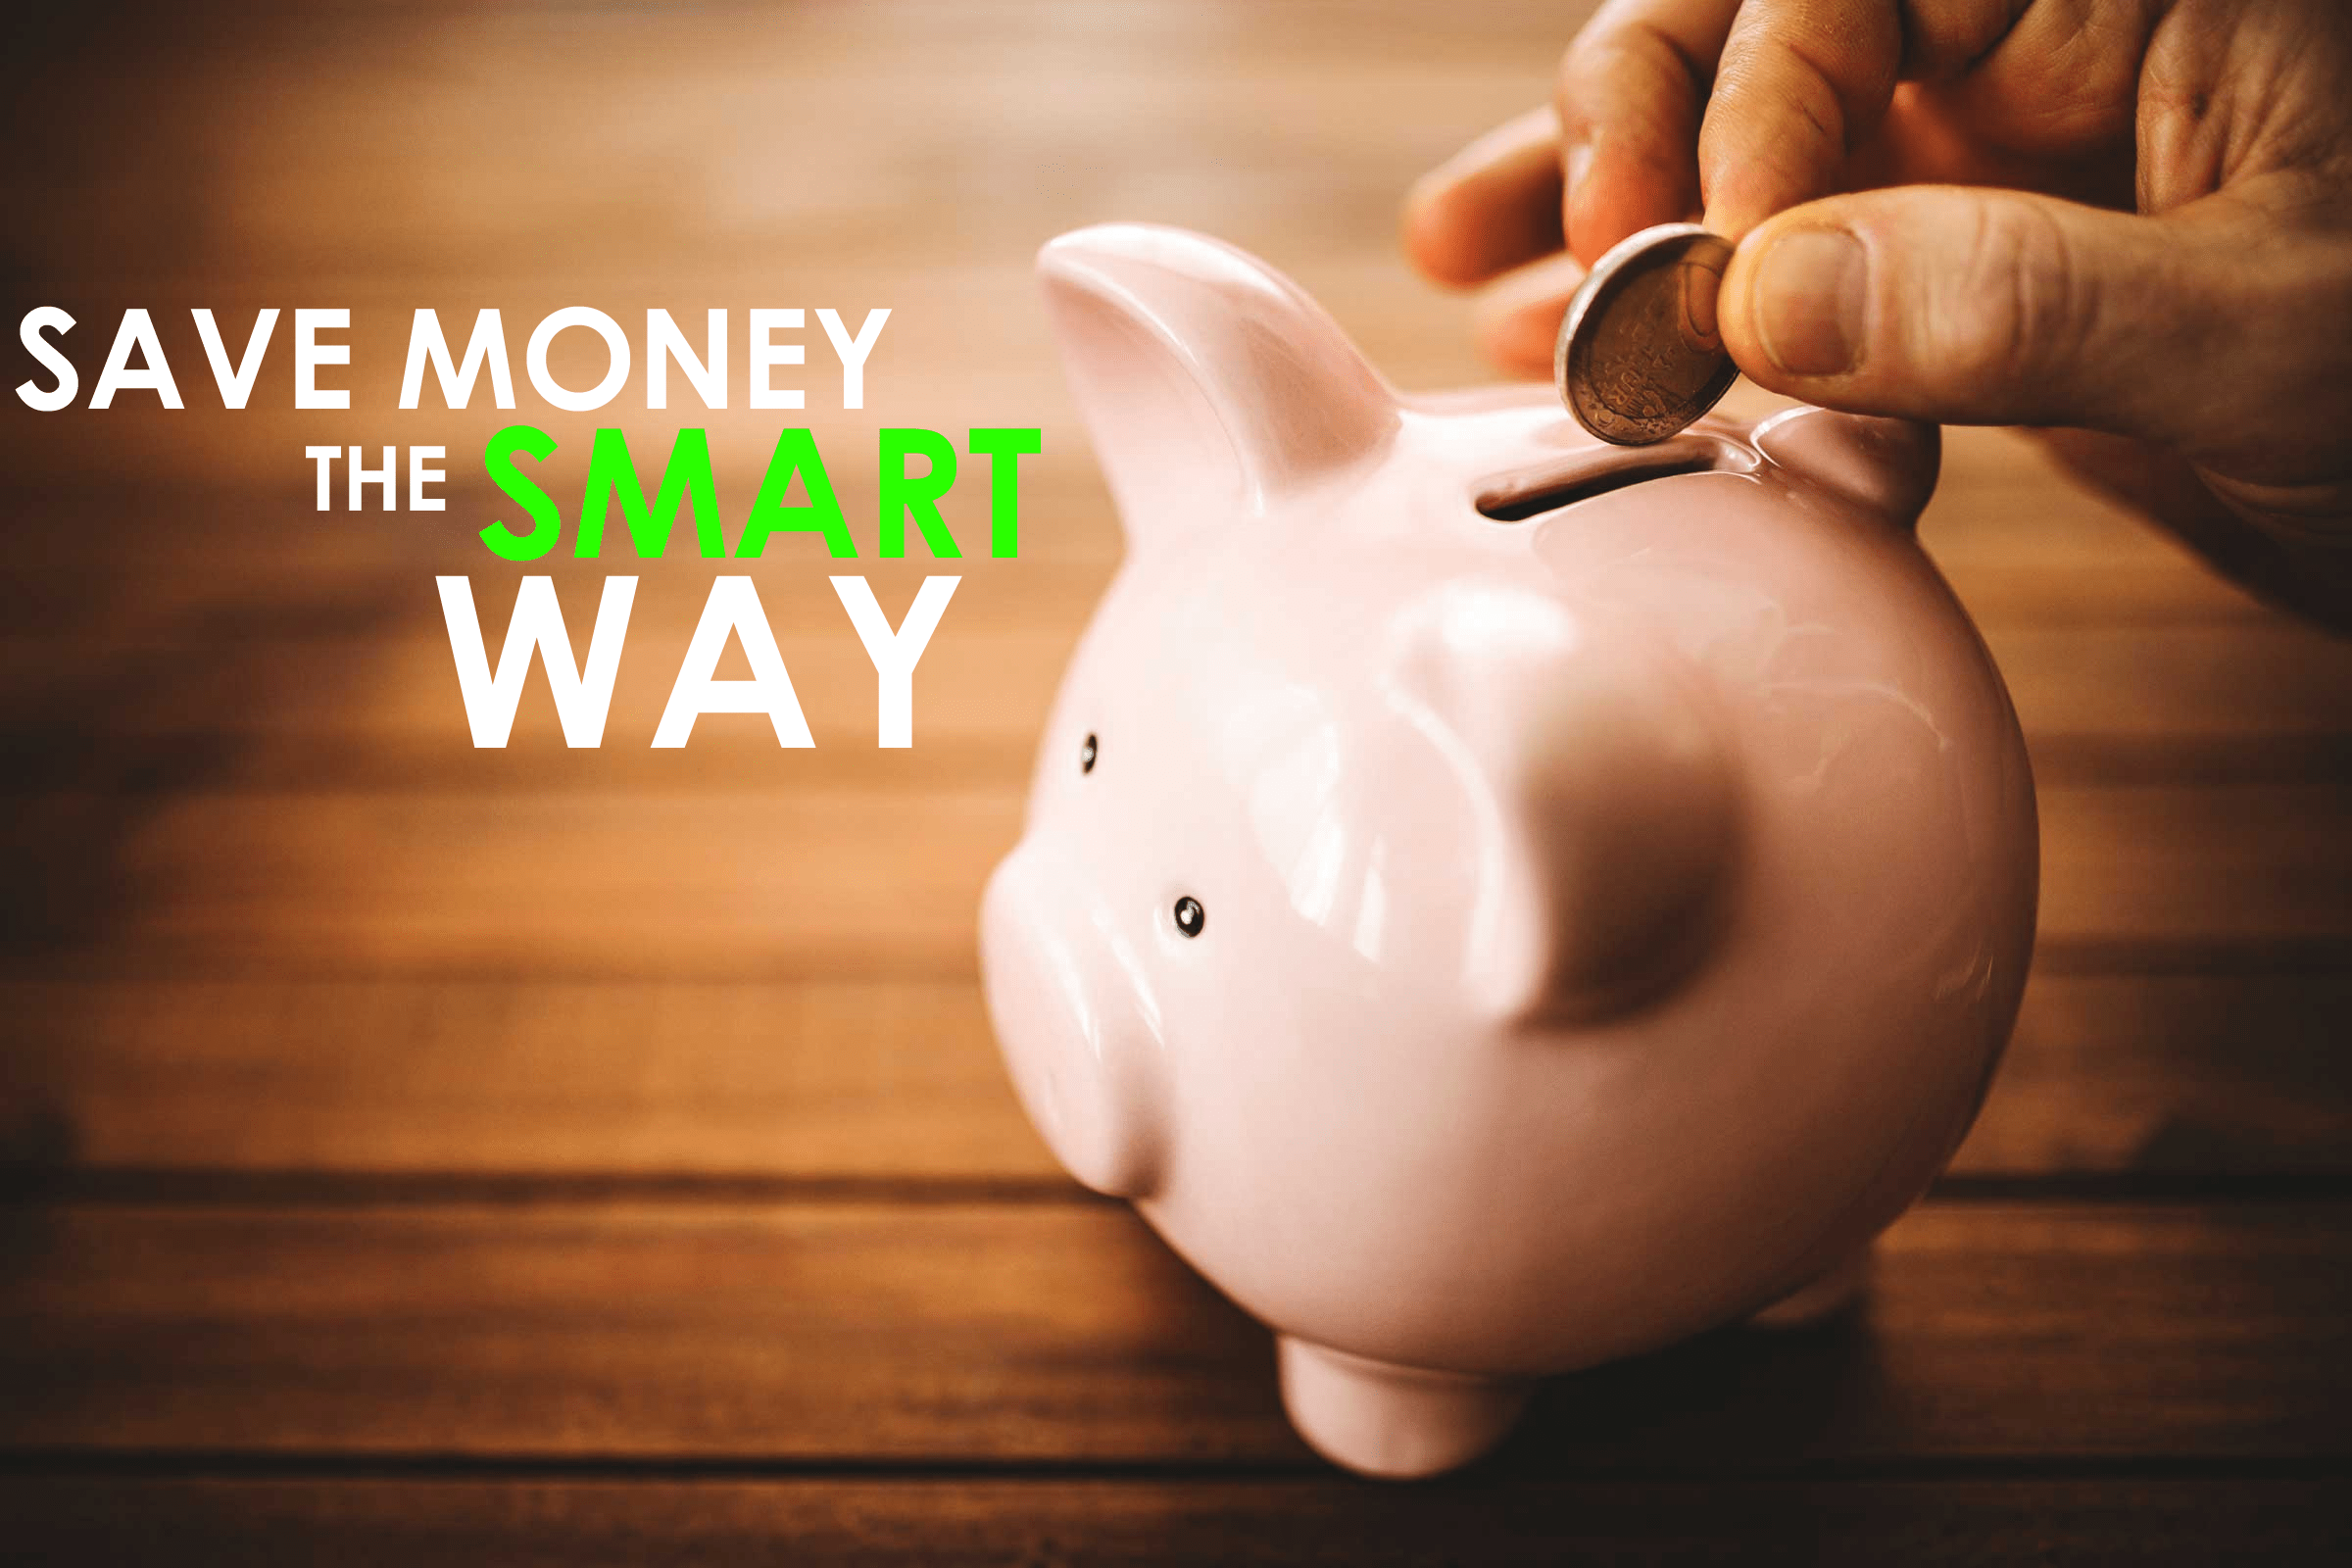 Save money the smart way